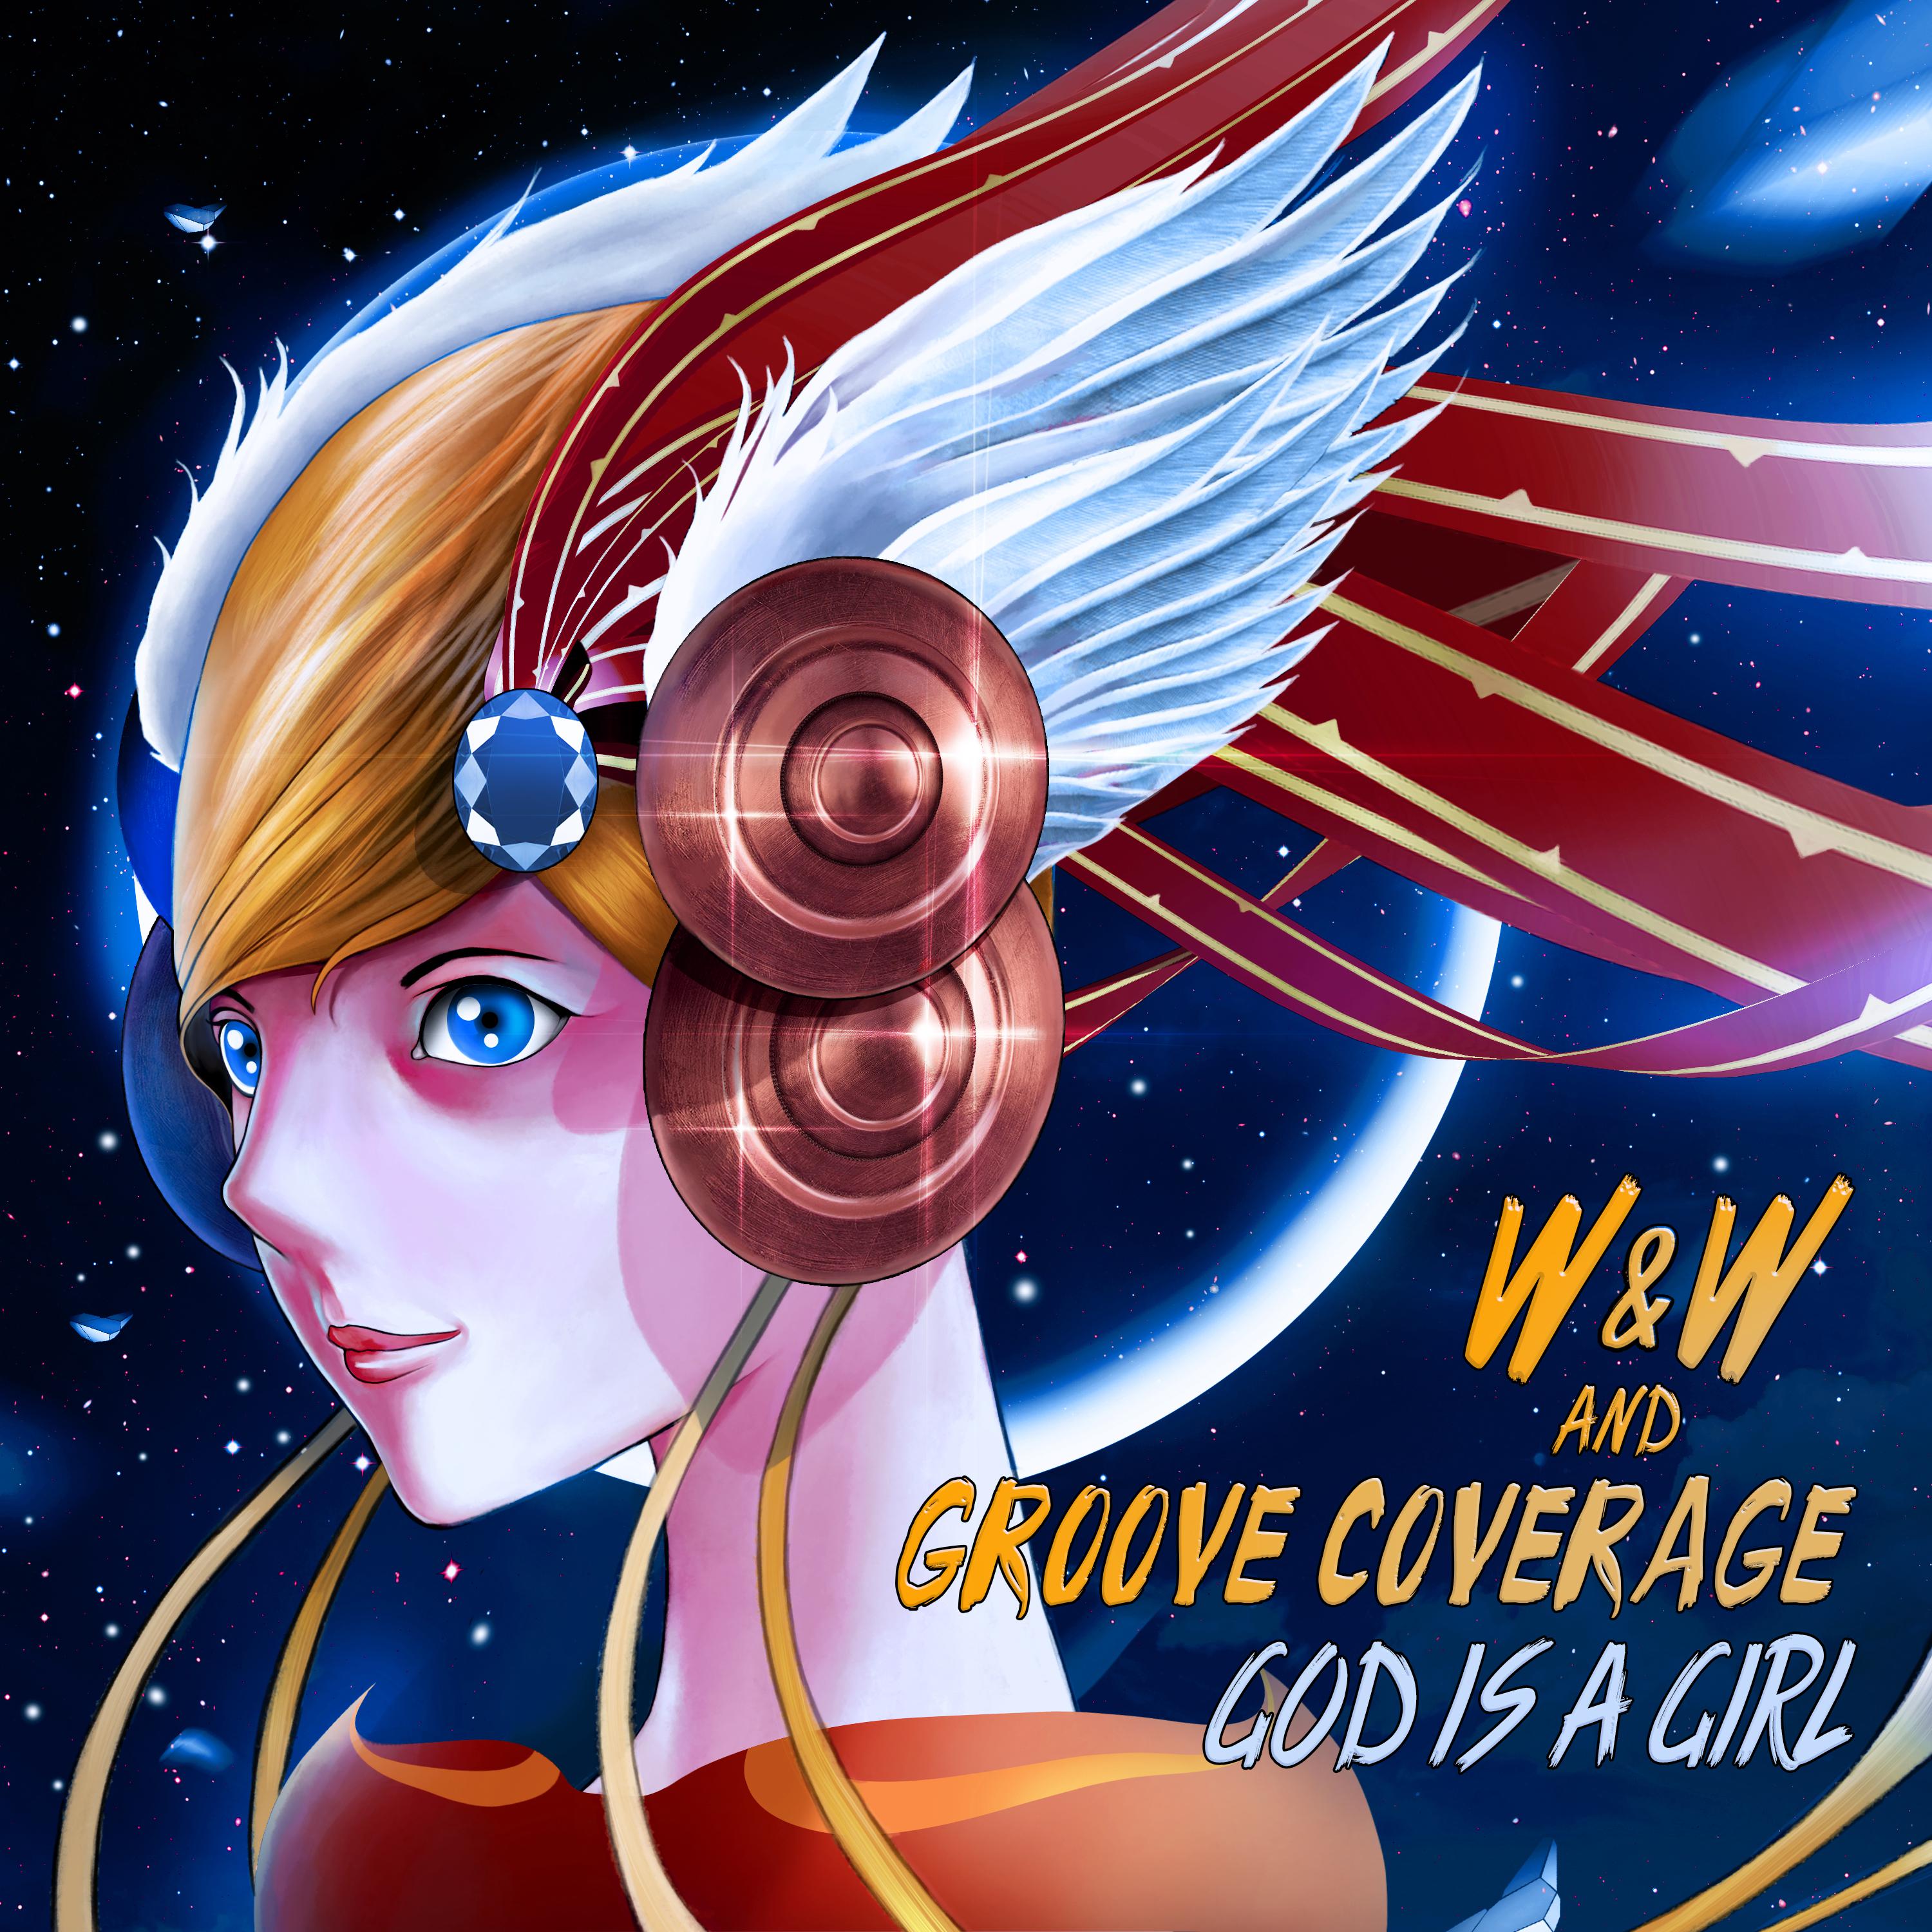 W&W - God Is A Girl